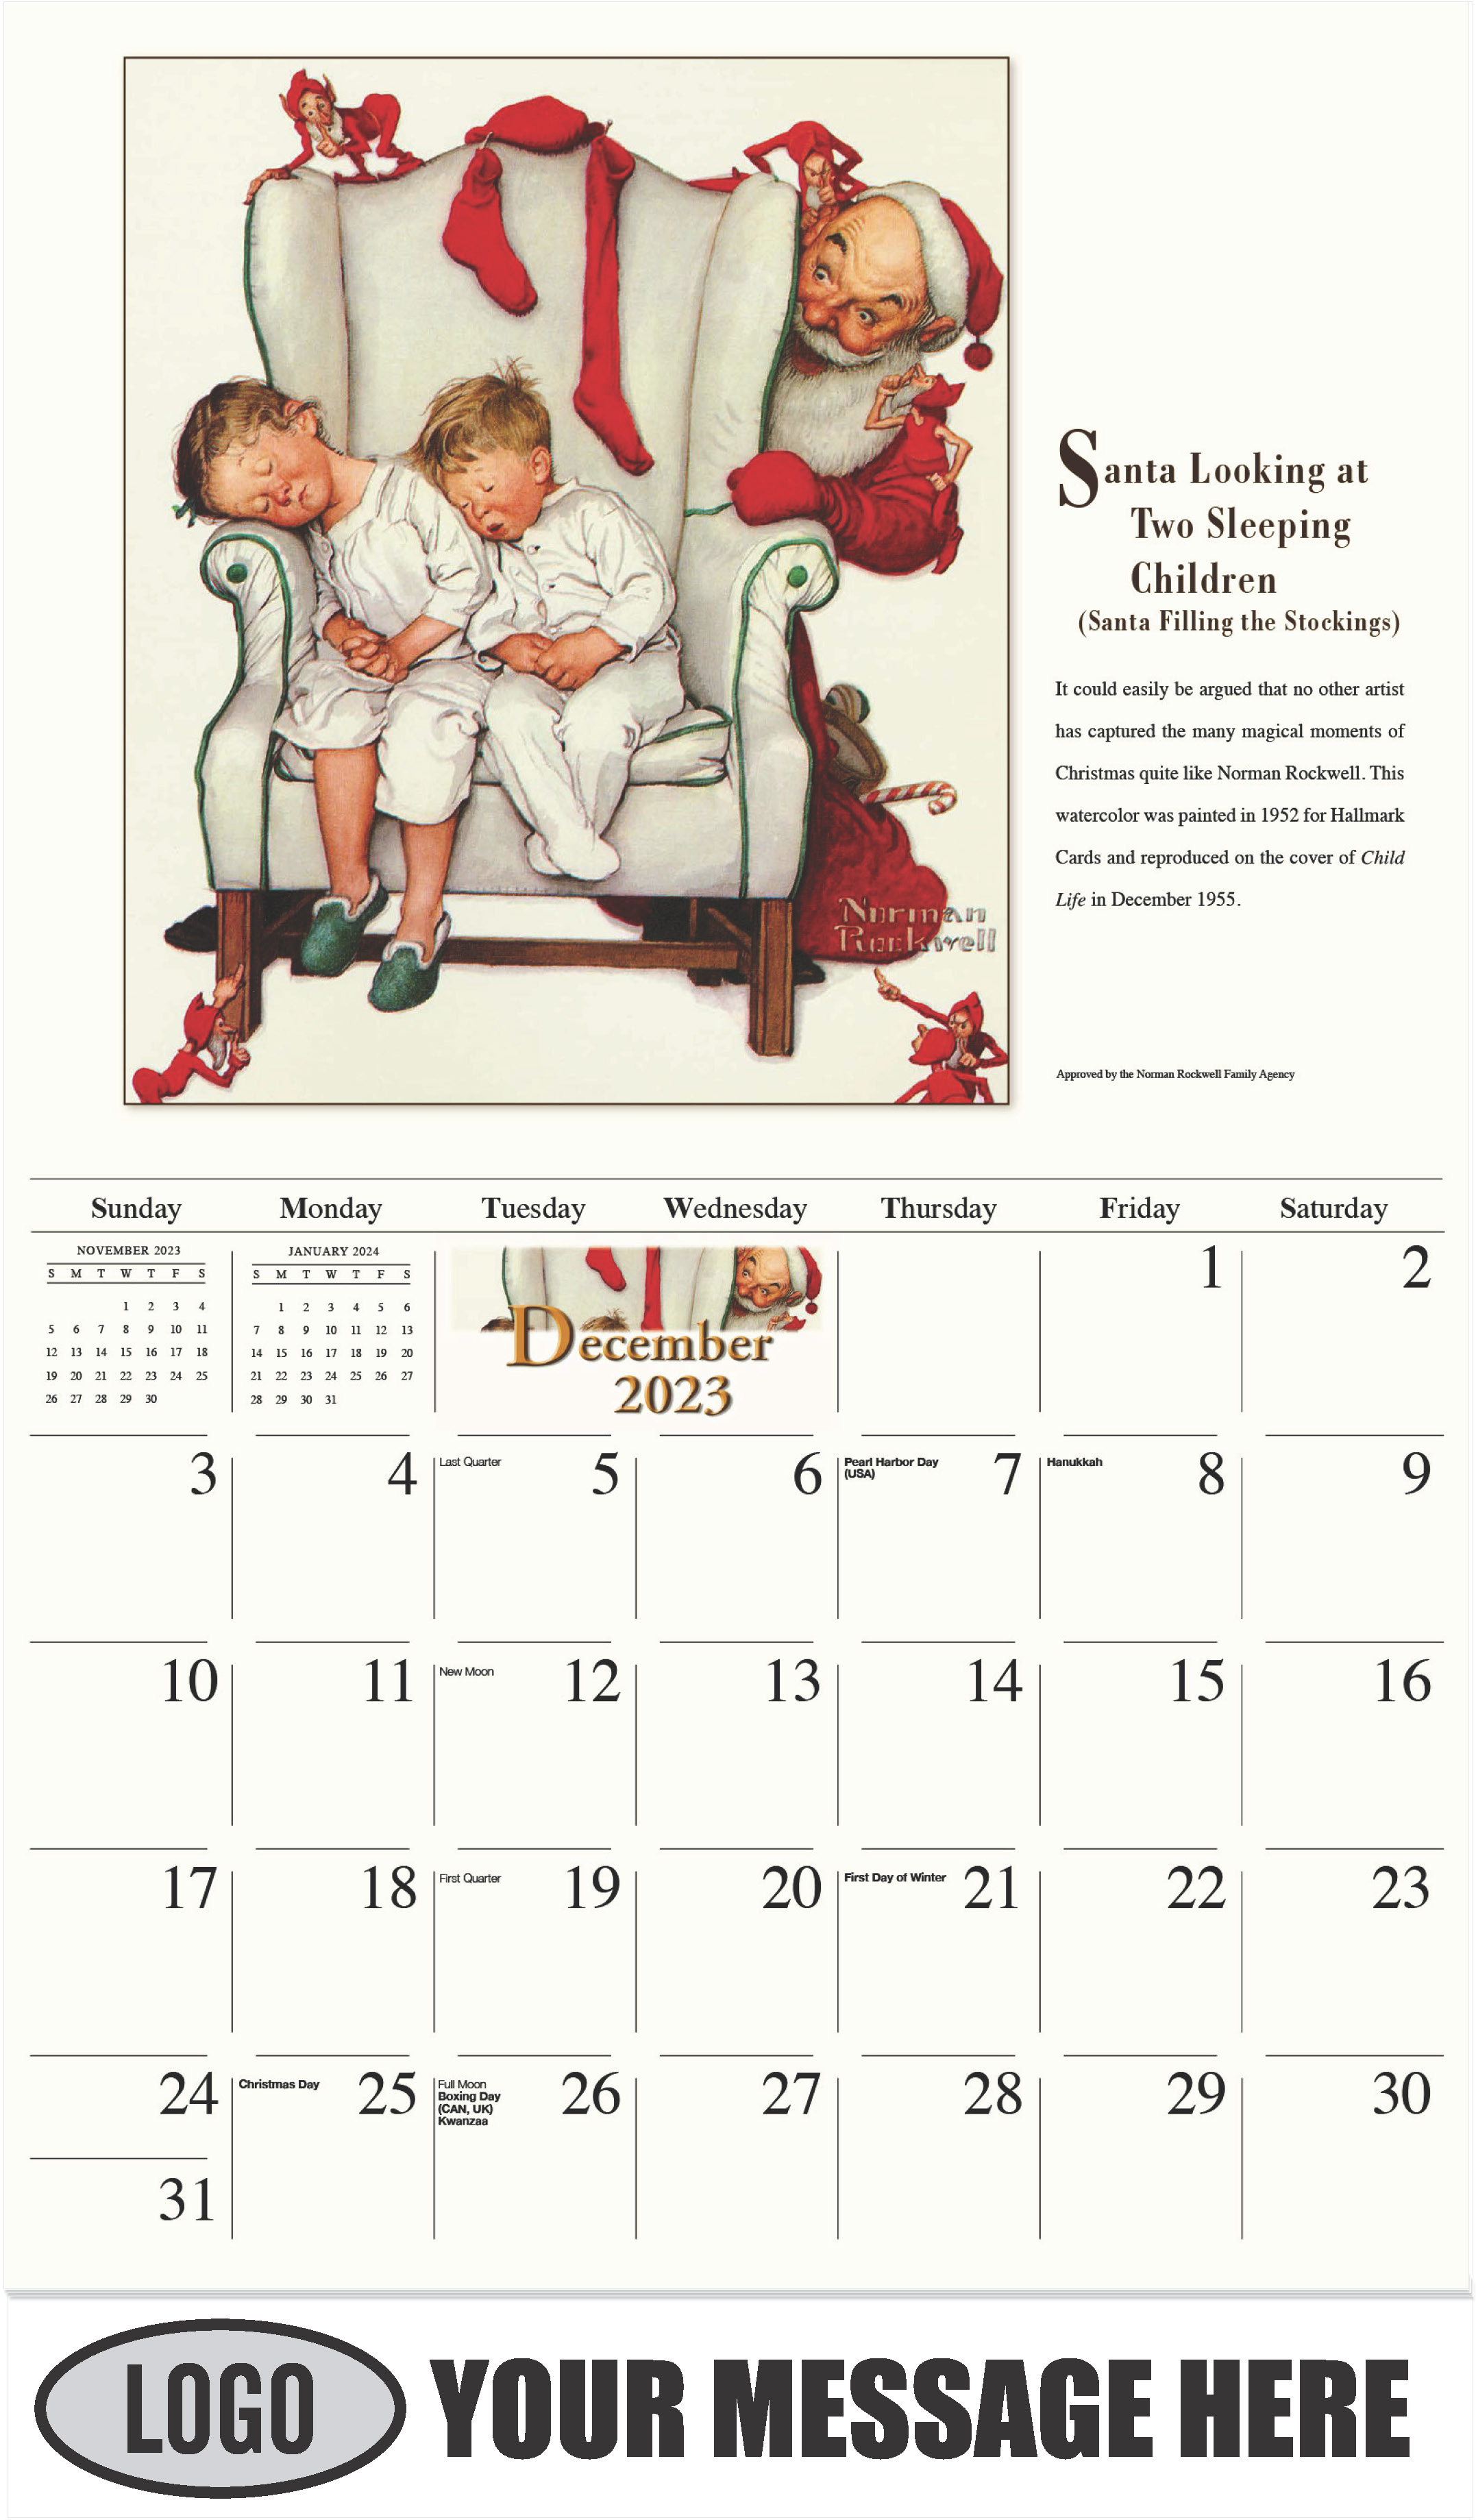 Santa Looking at Two Sleeping Children (Santa Filling the Stockings) - December 2023 - Norman Rockwell - Memorable Images 2023 Promotional Calendar